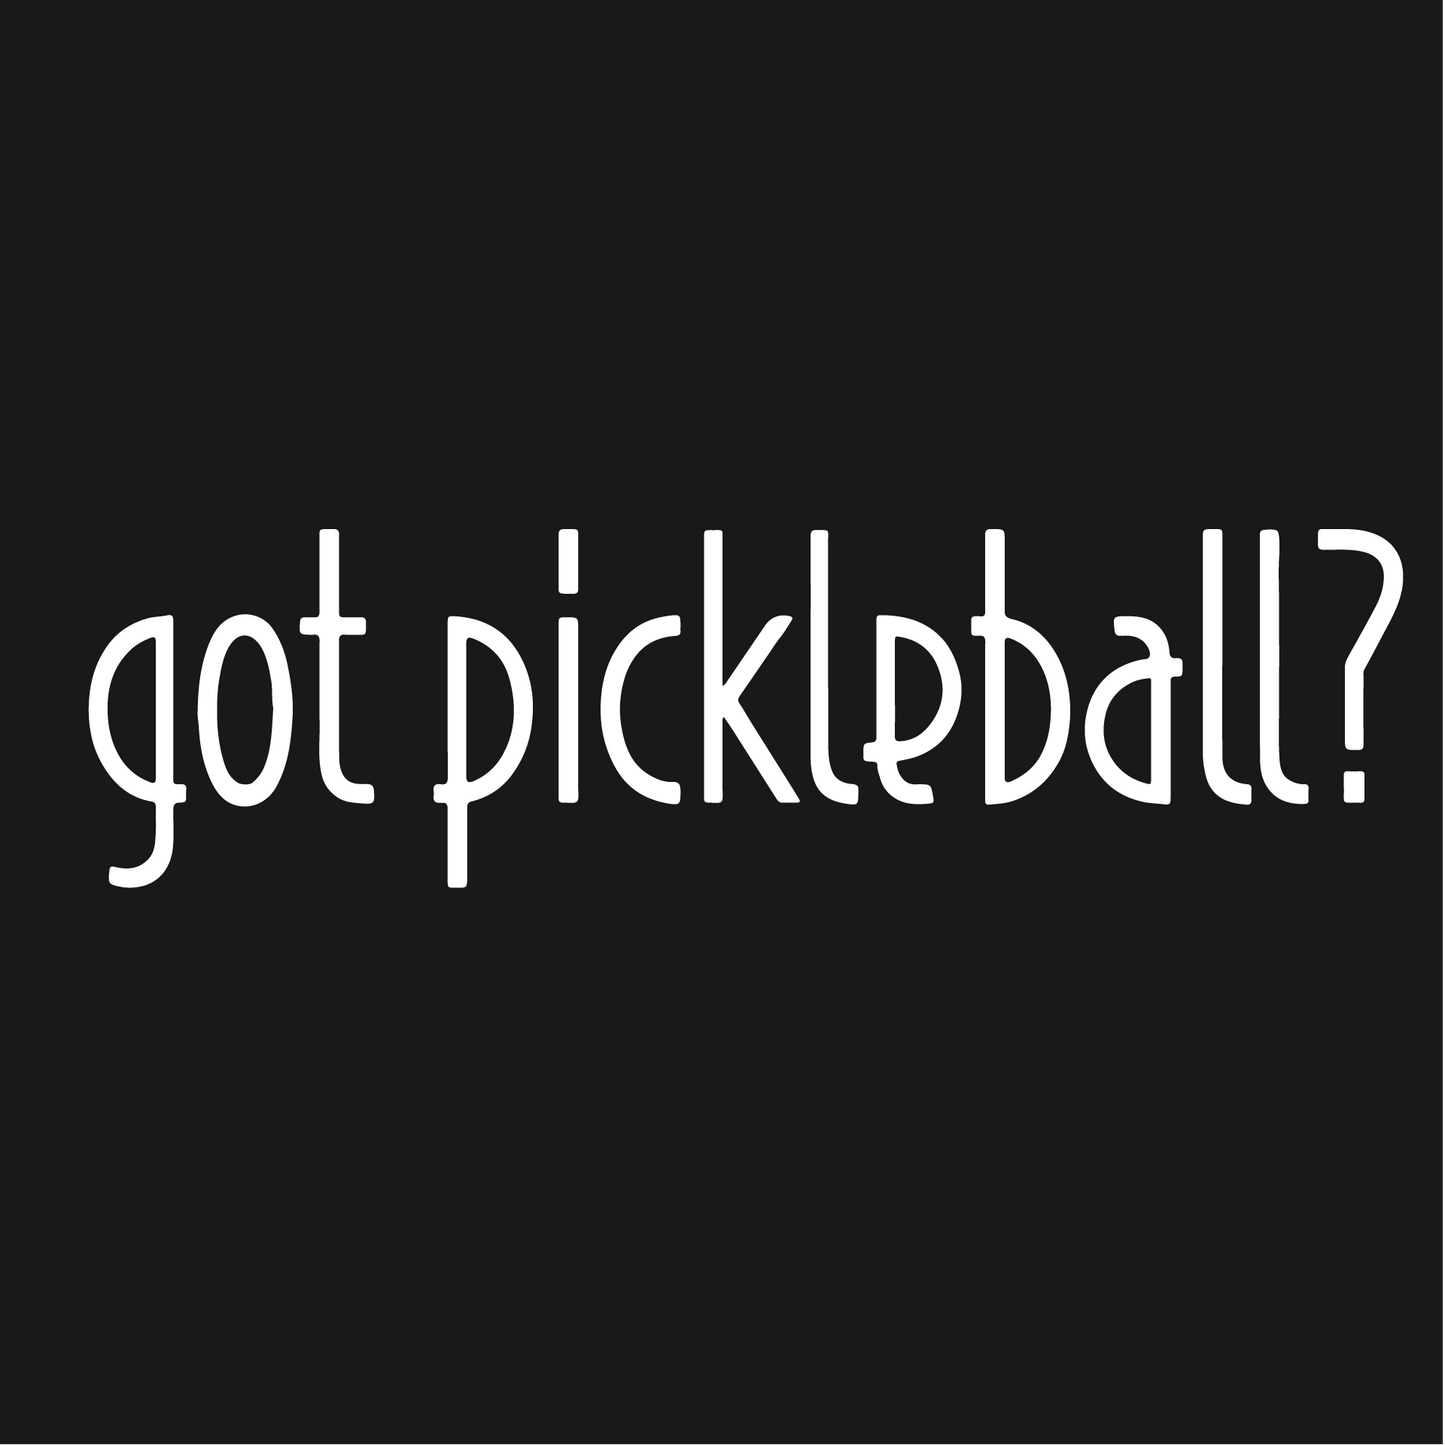 Got Pickleball? | Pickleball Headband | 100% Polyester